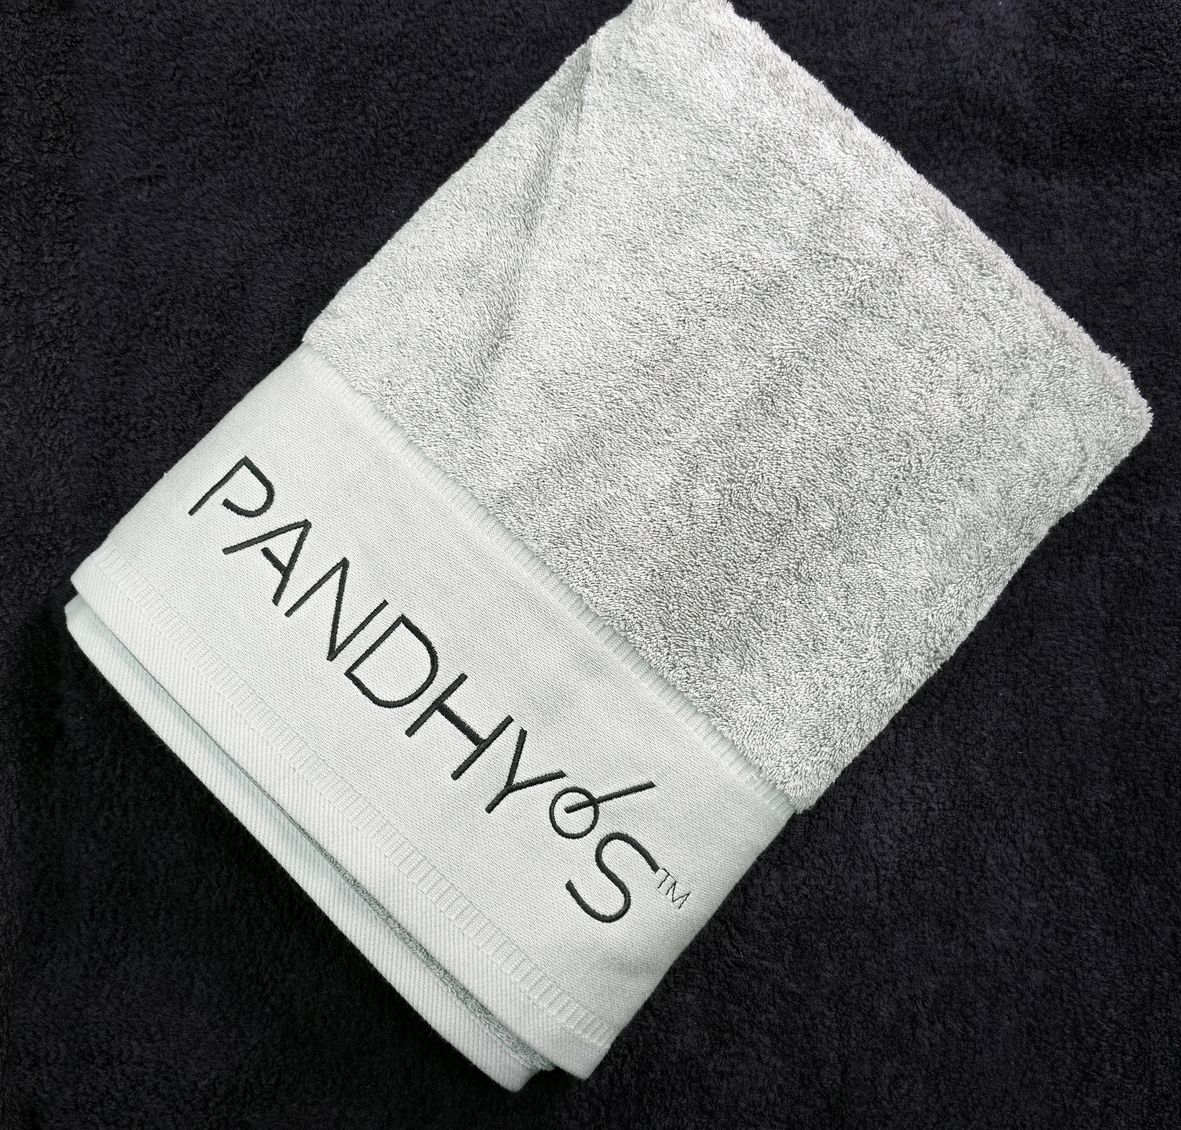 Полотенце серое с логотипом Пандис  80*160 см фото